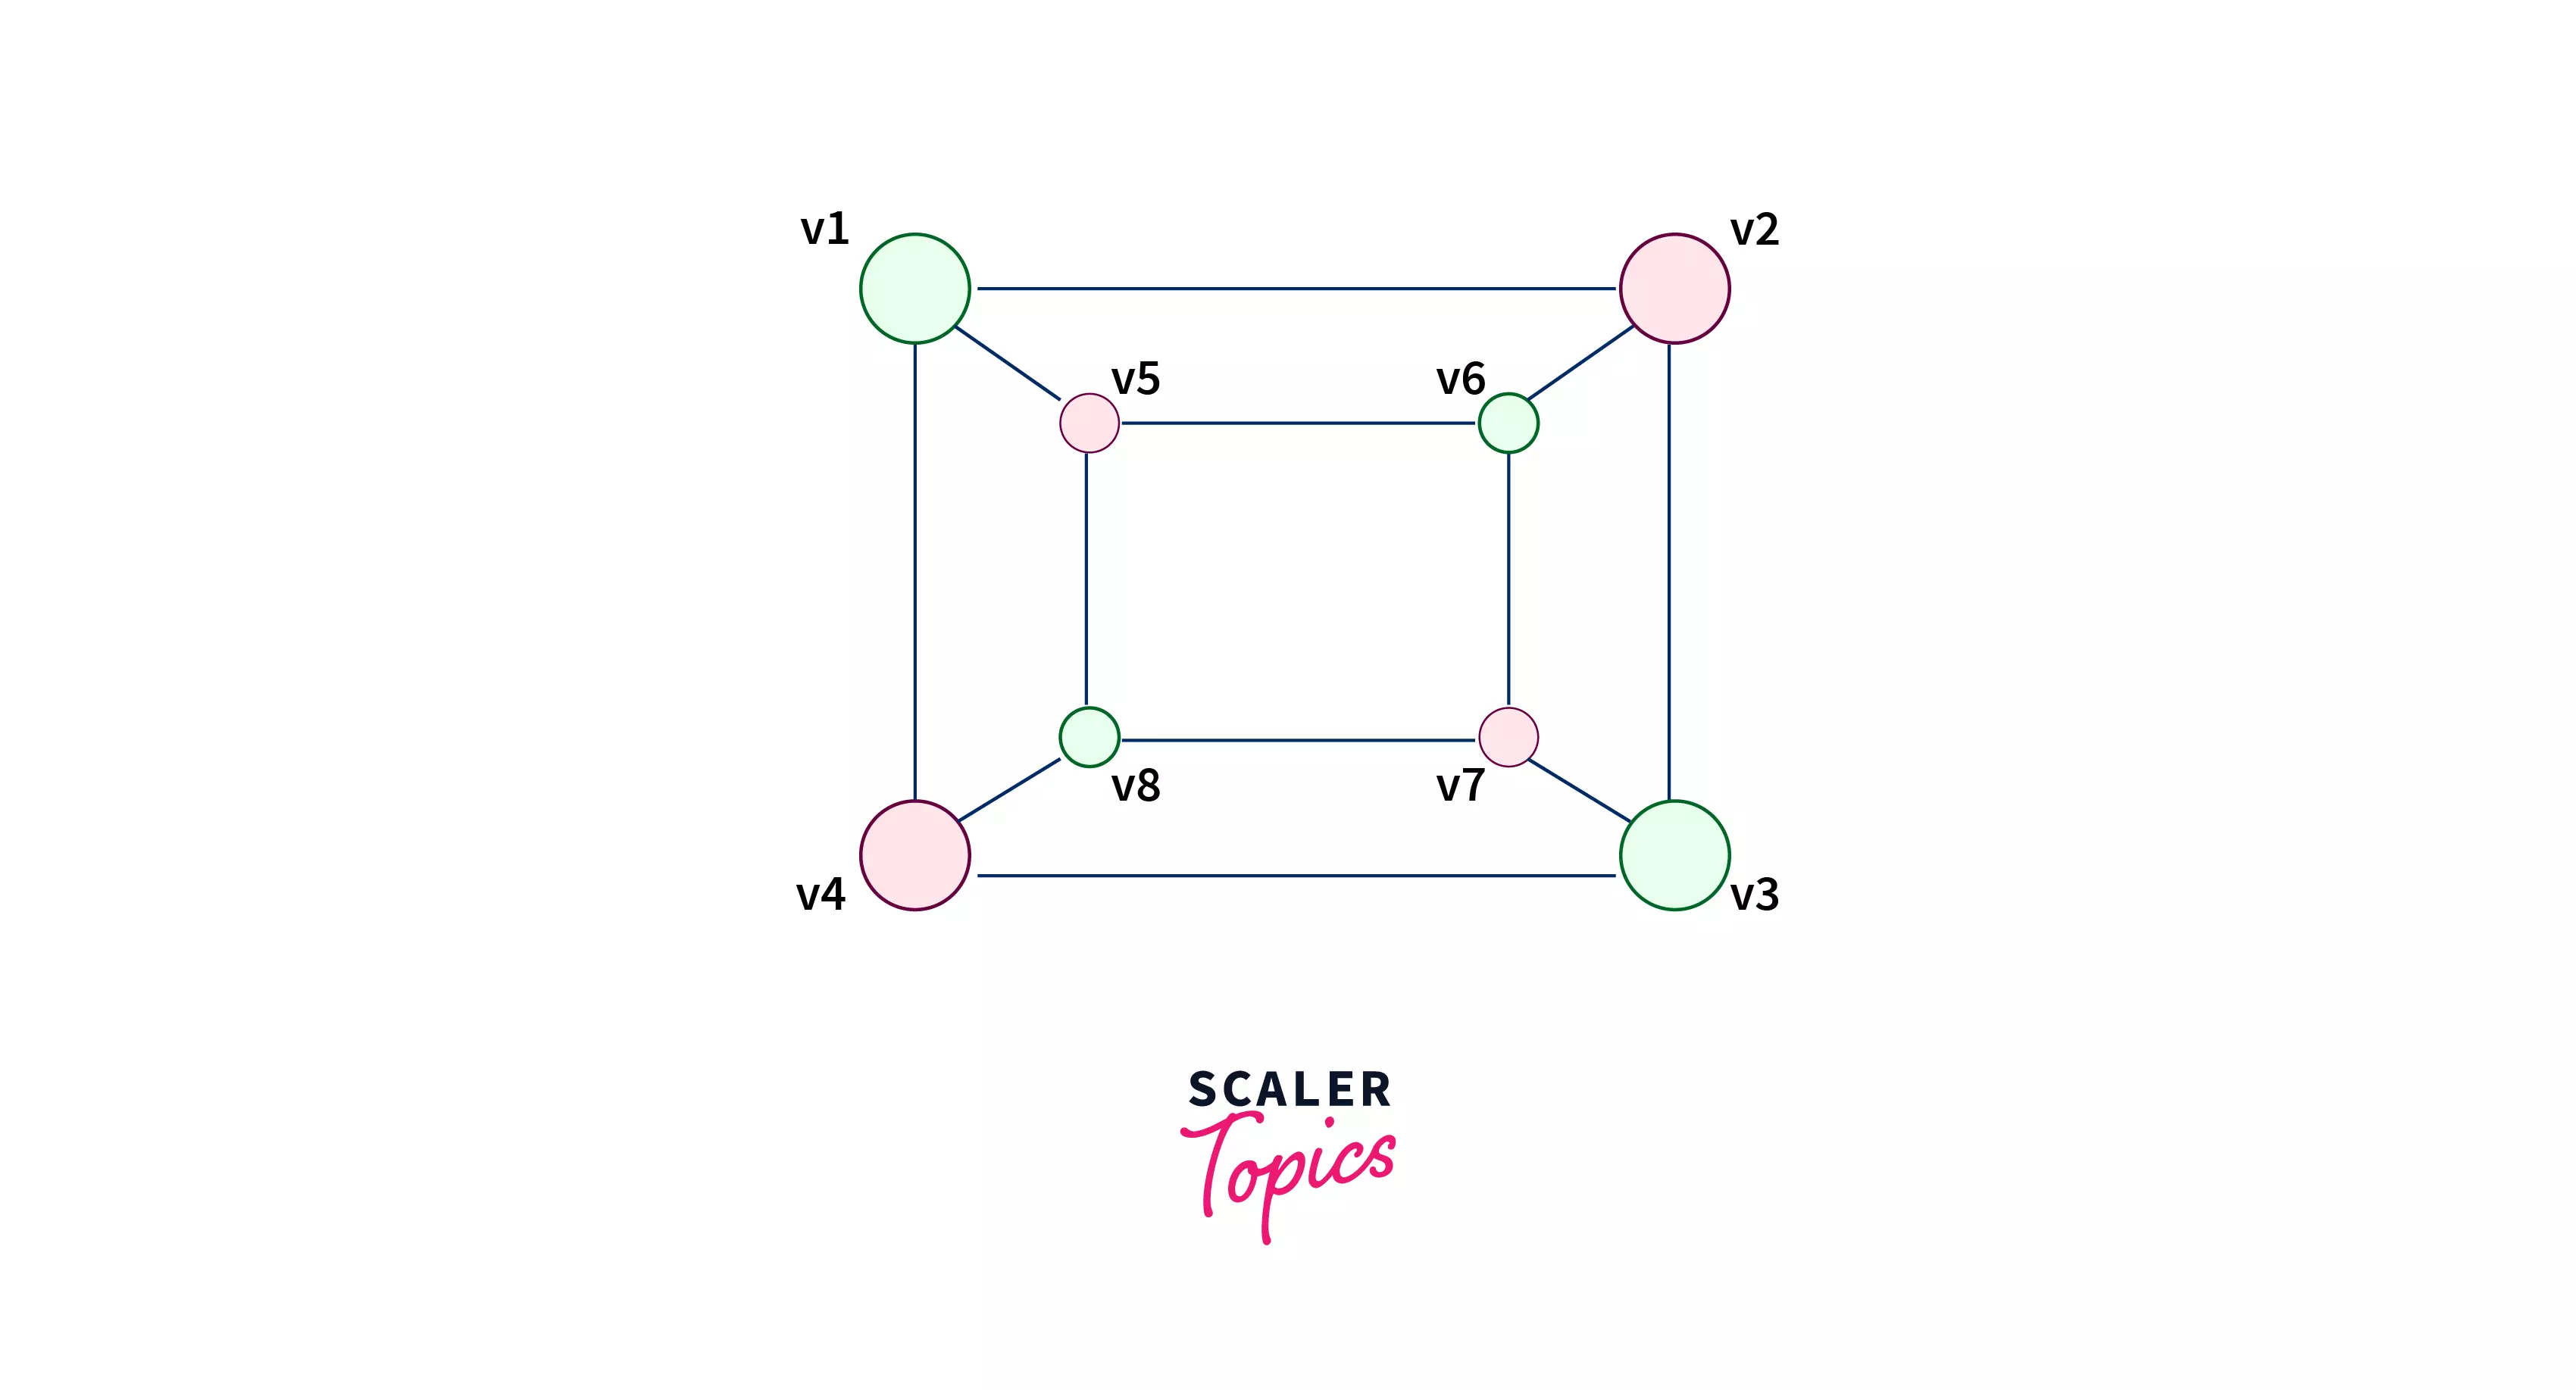 bipartite graph problem 2 solution